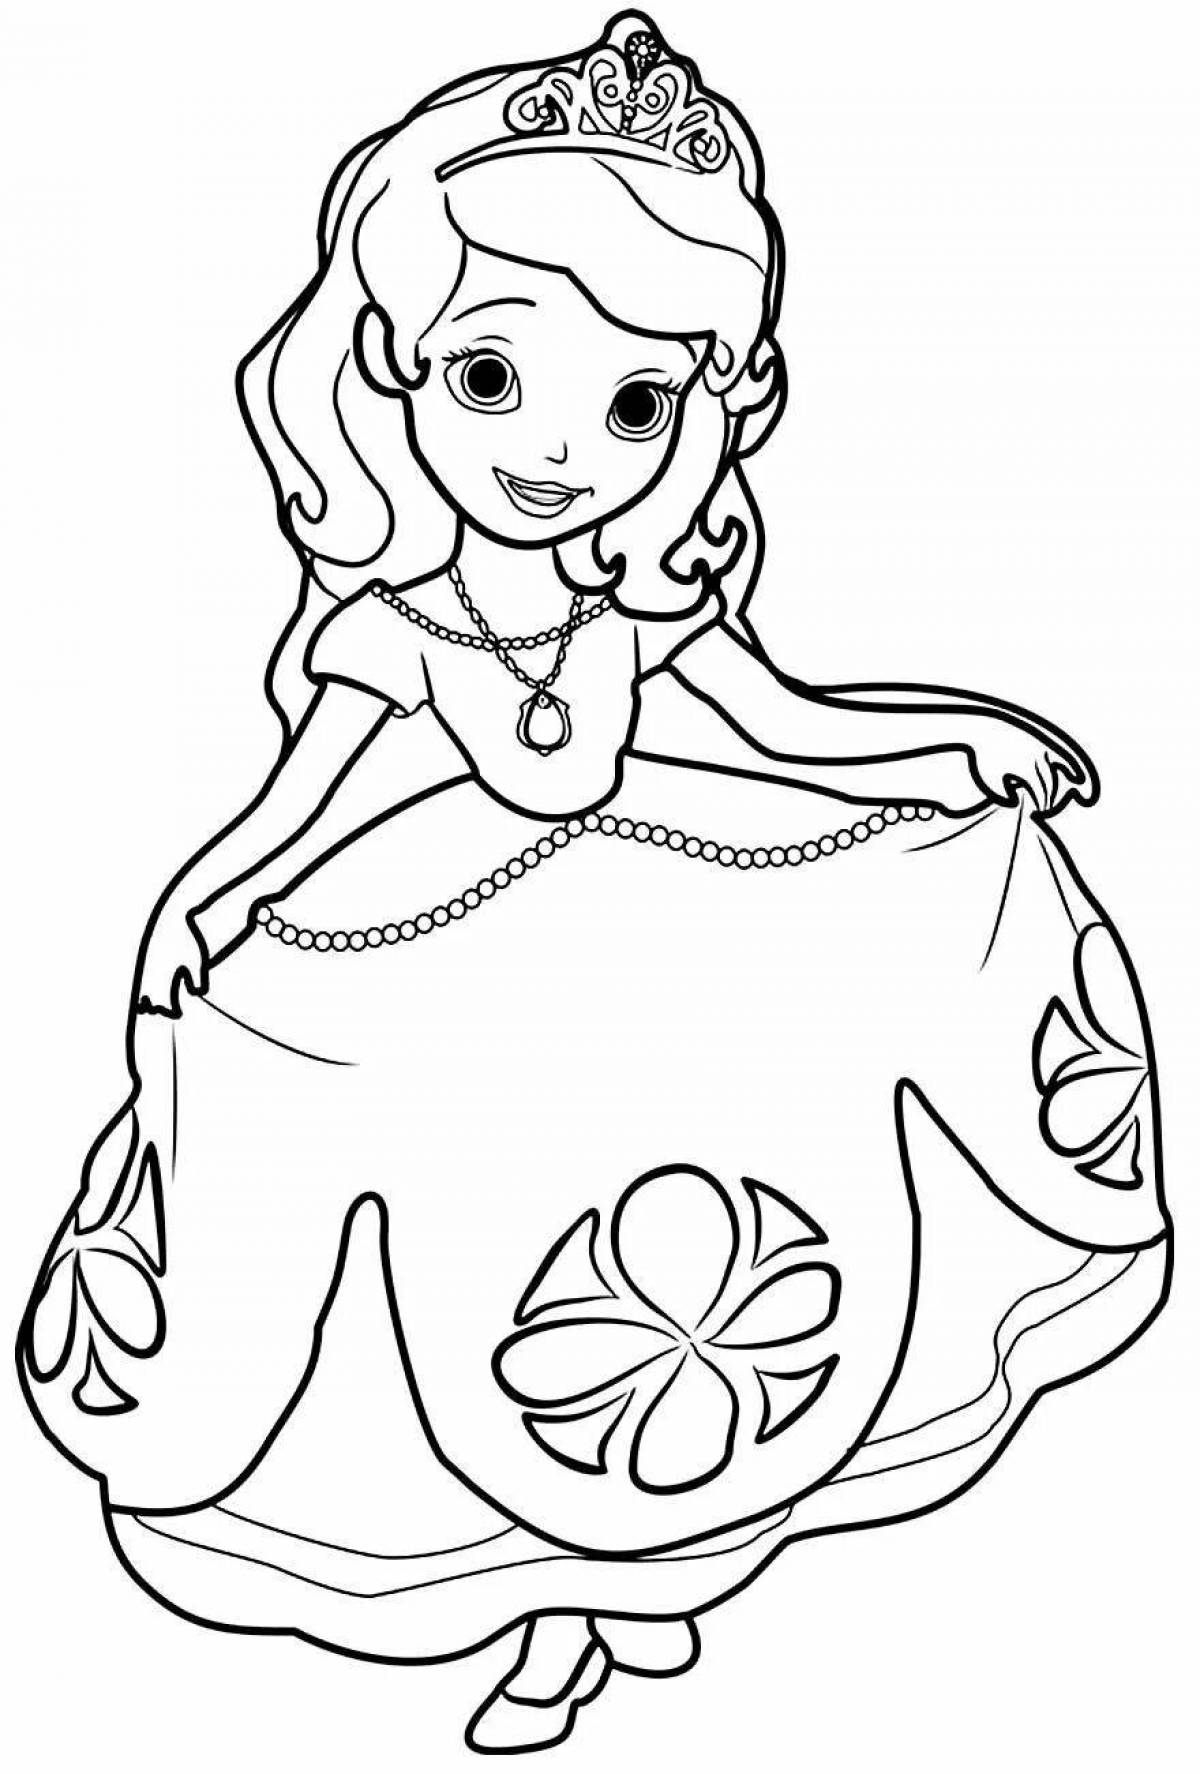 Playful princess coloring book for kids